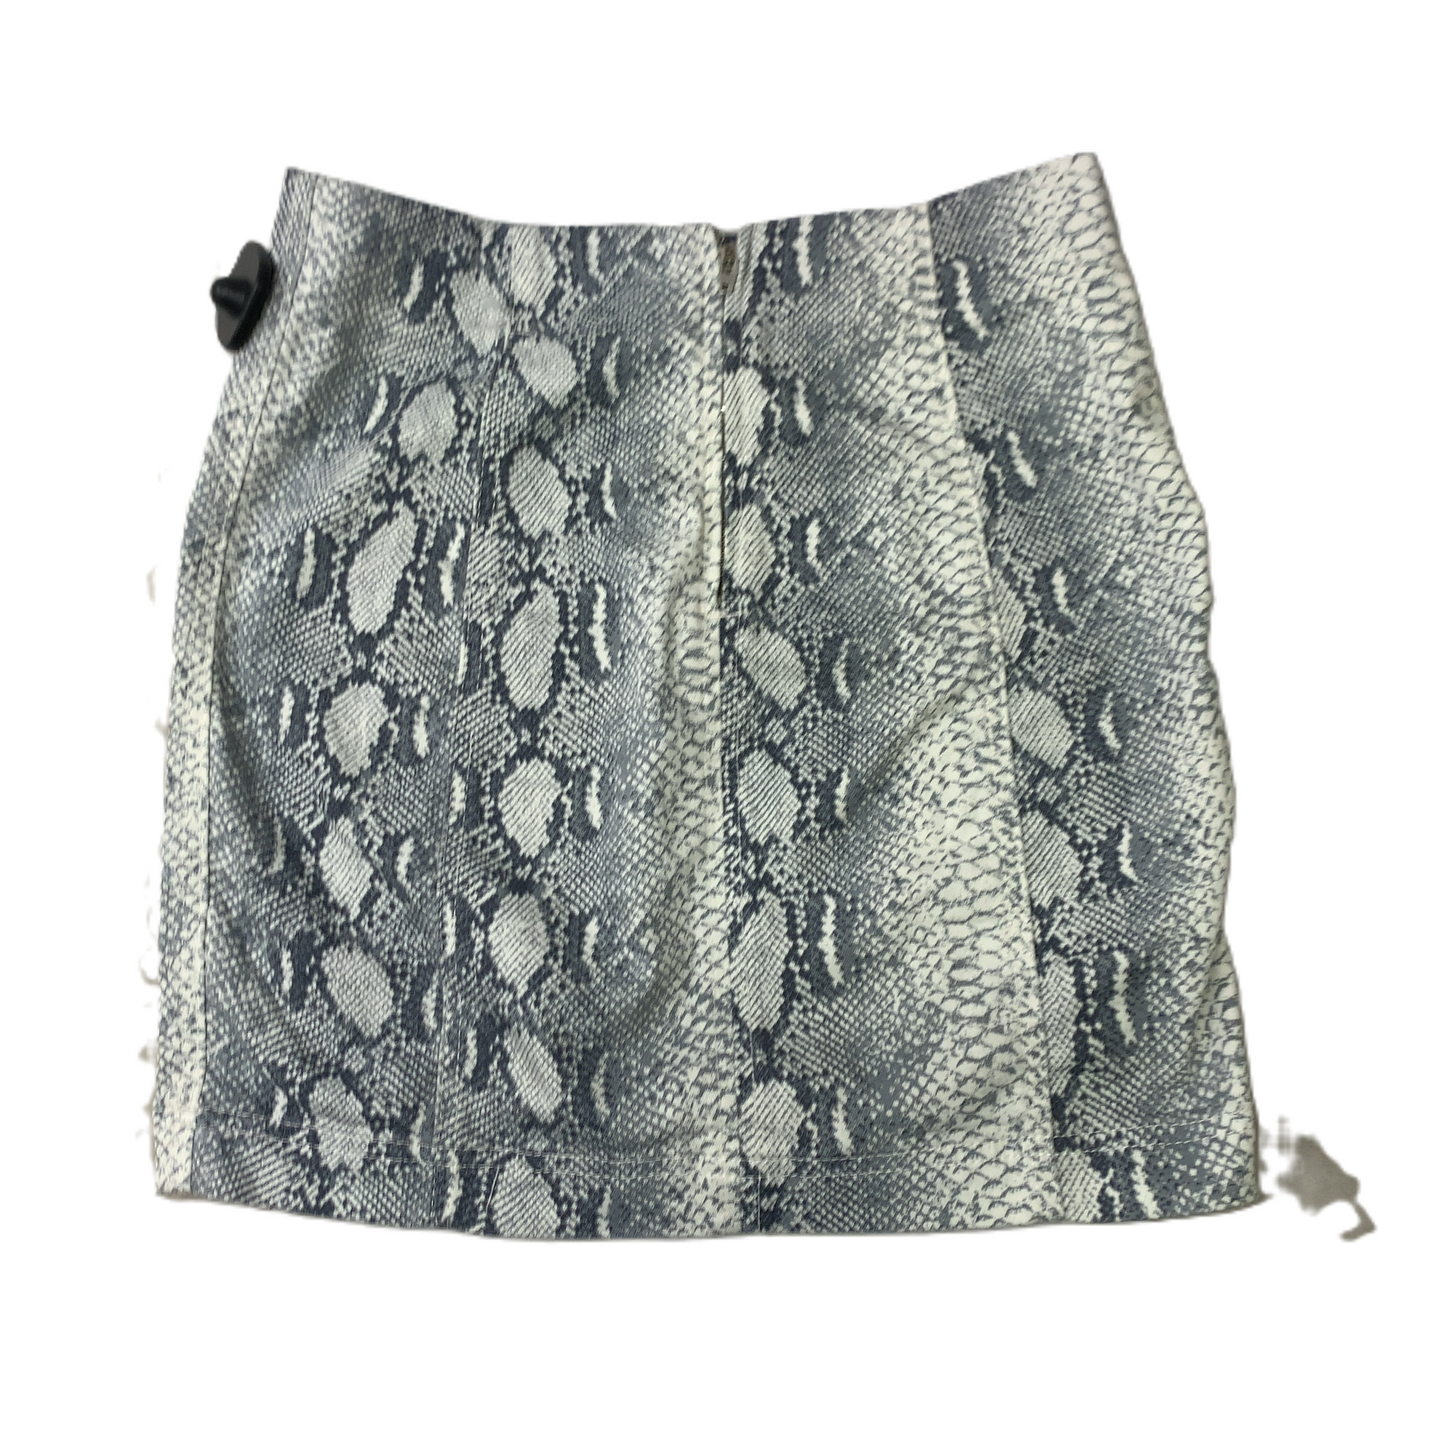 Snakeskin Print  Skirt Mini & Short By Free People  Size: S